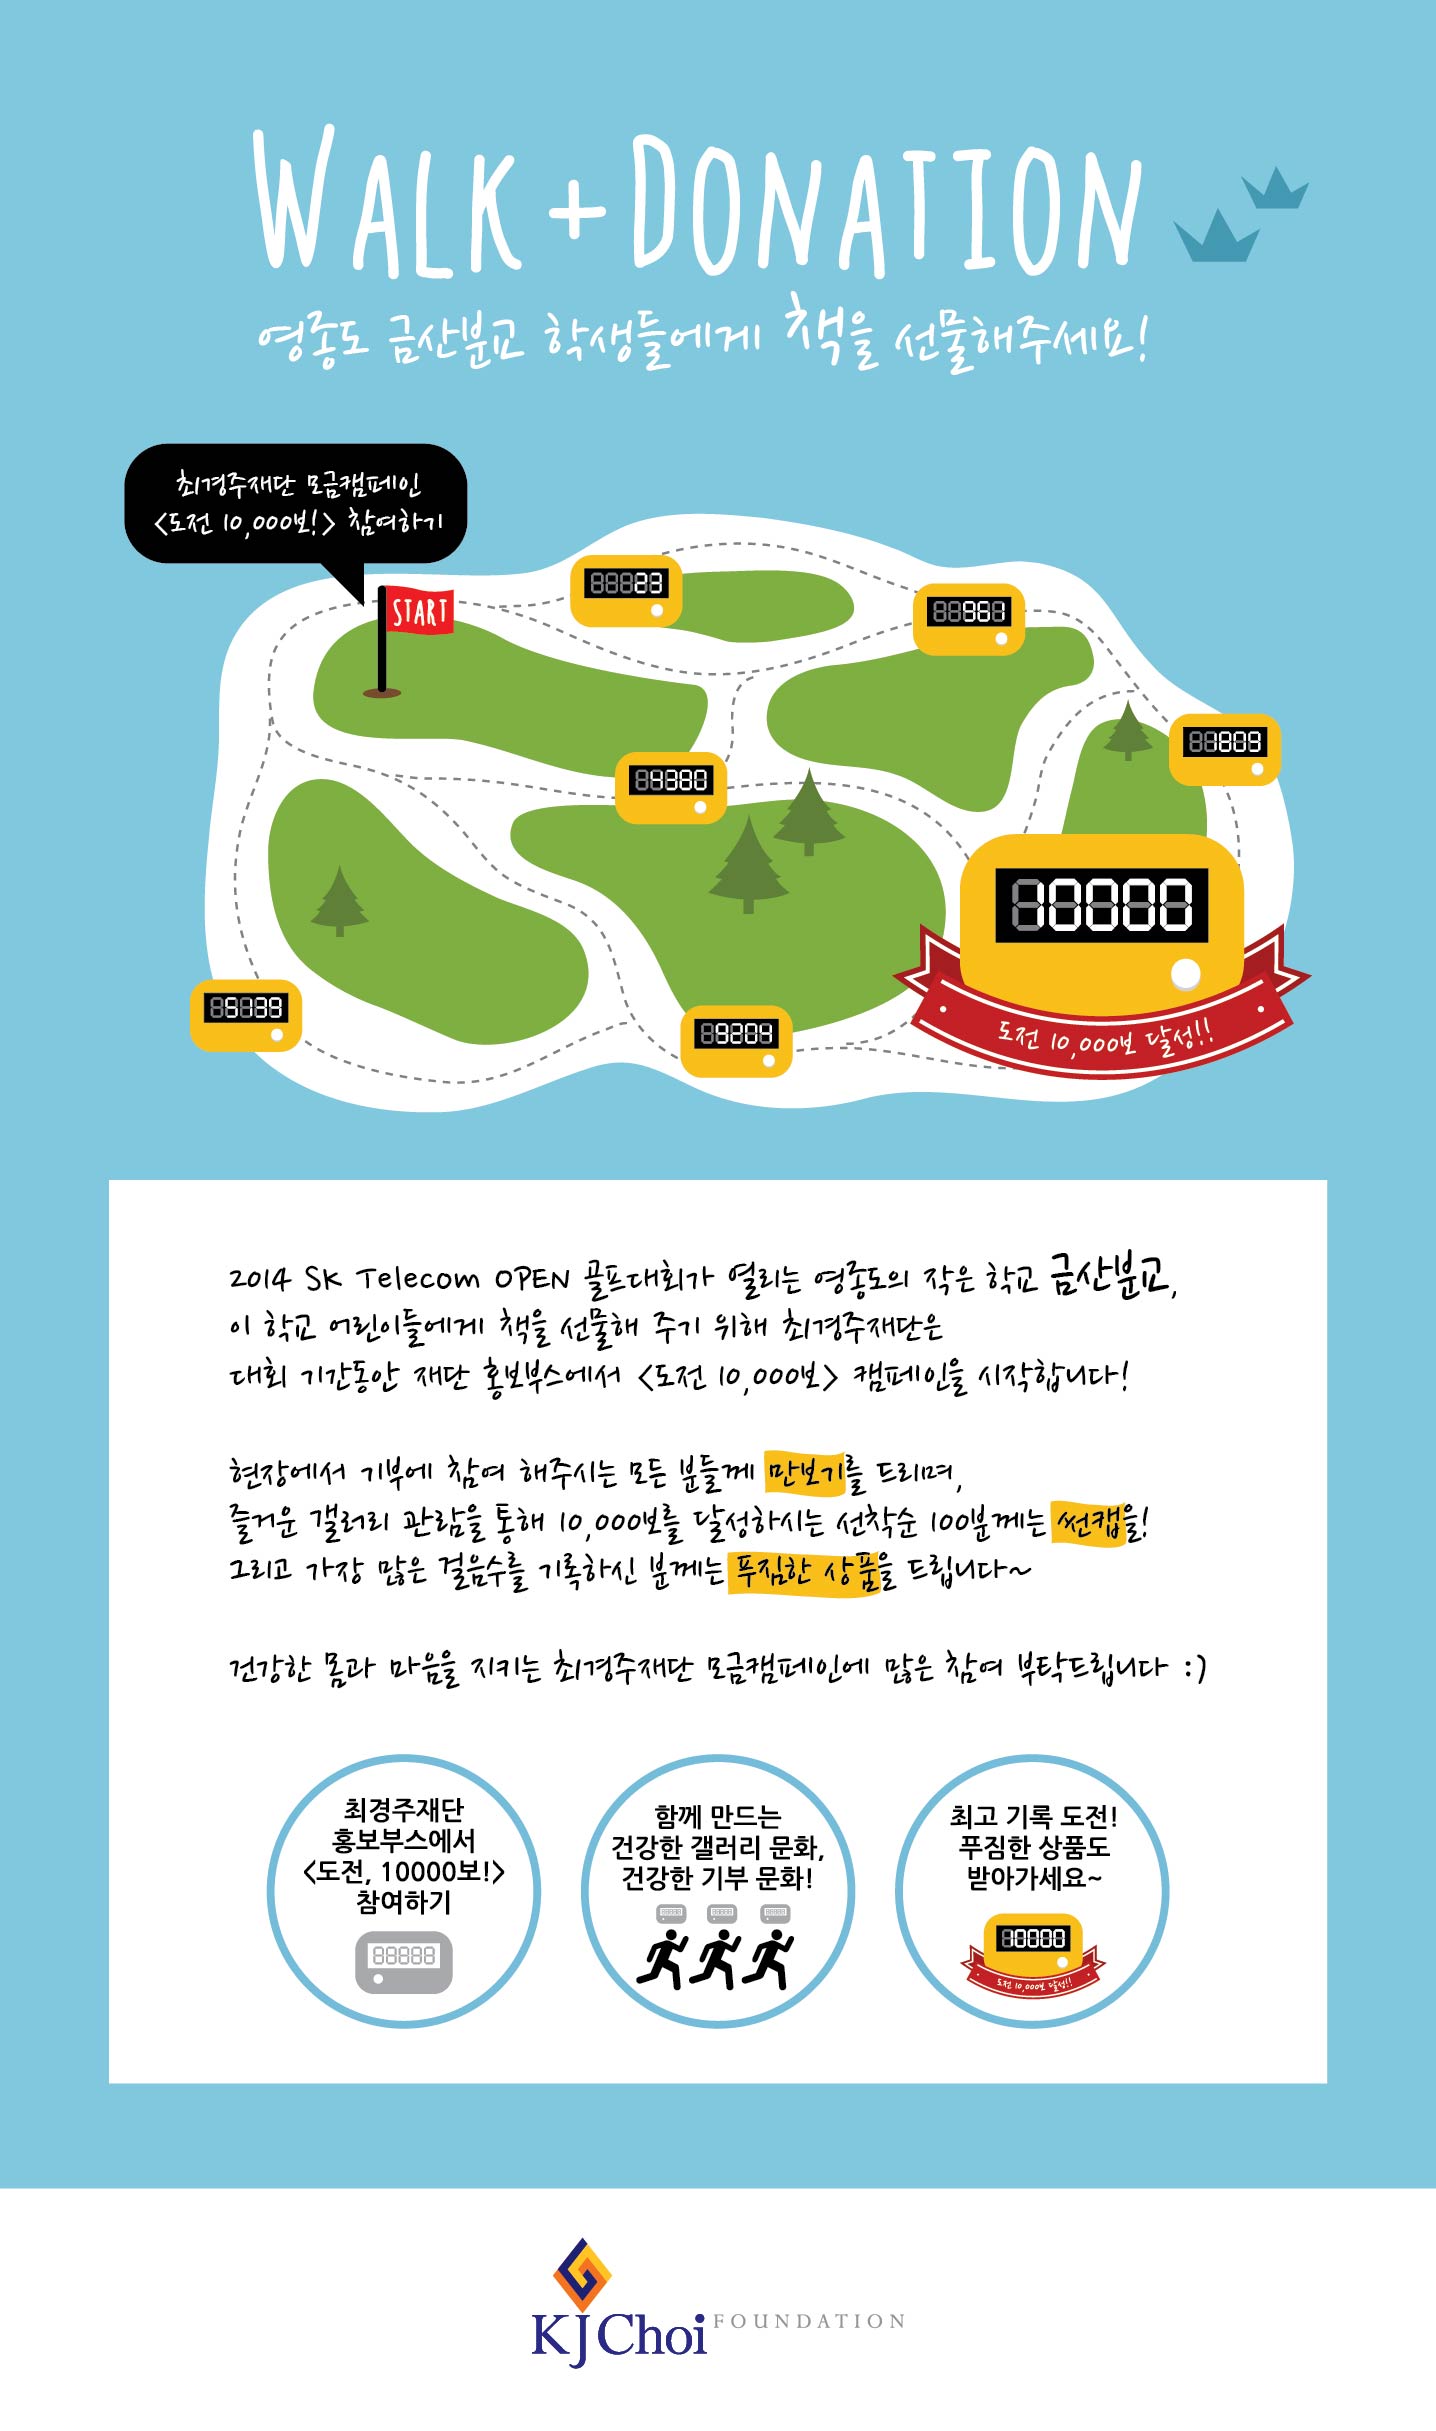 2014 SK Telecom OPEN 최경주재단 홍보부스 모금 캠페인